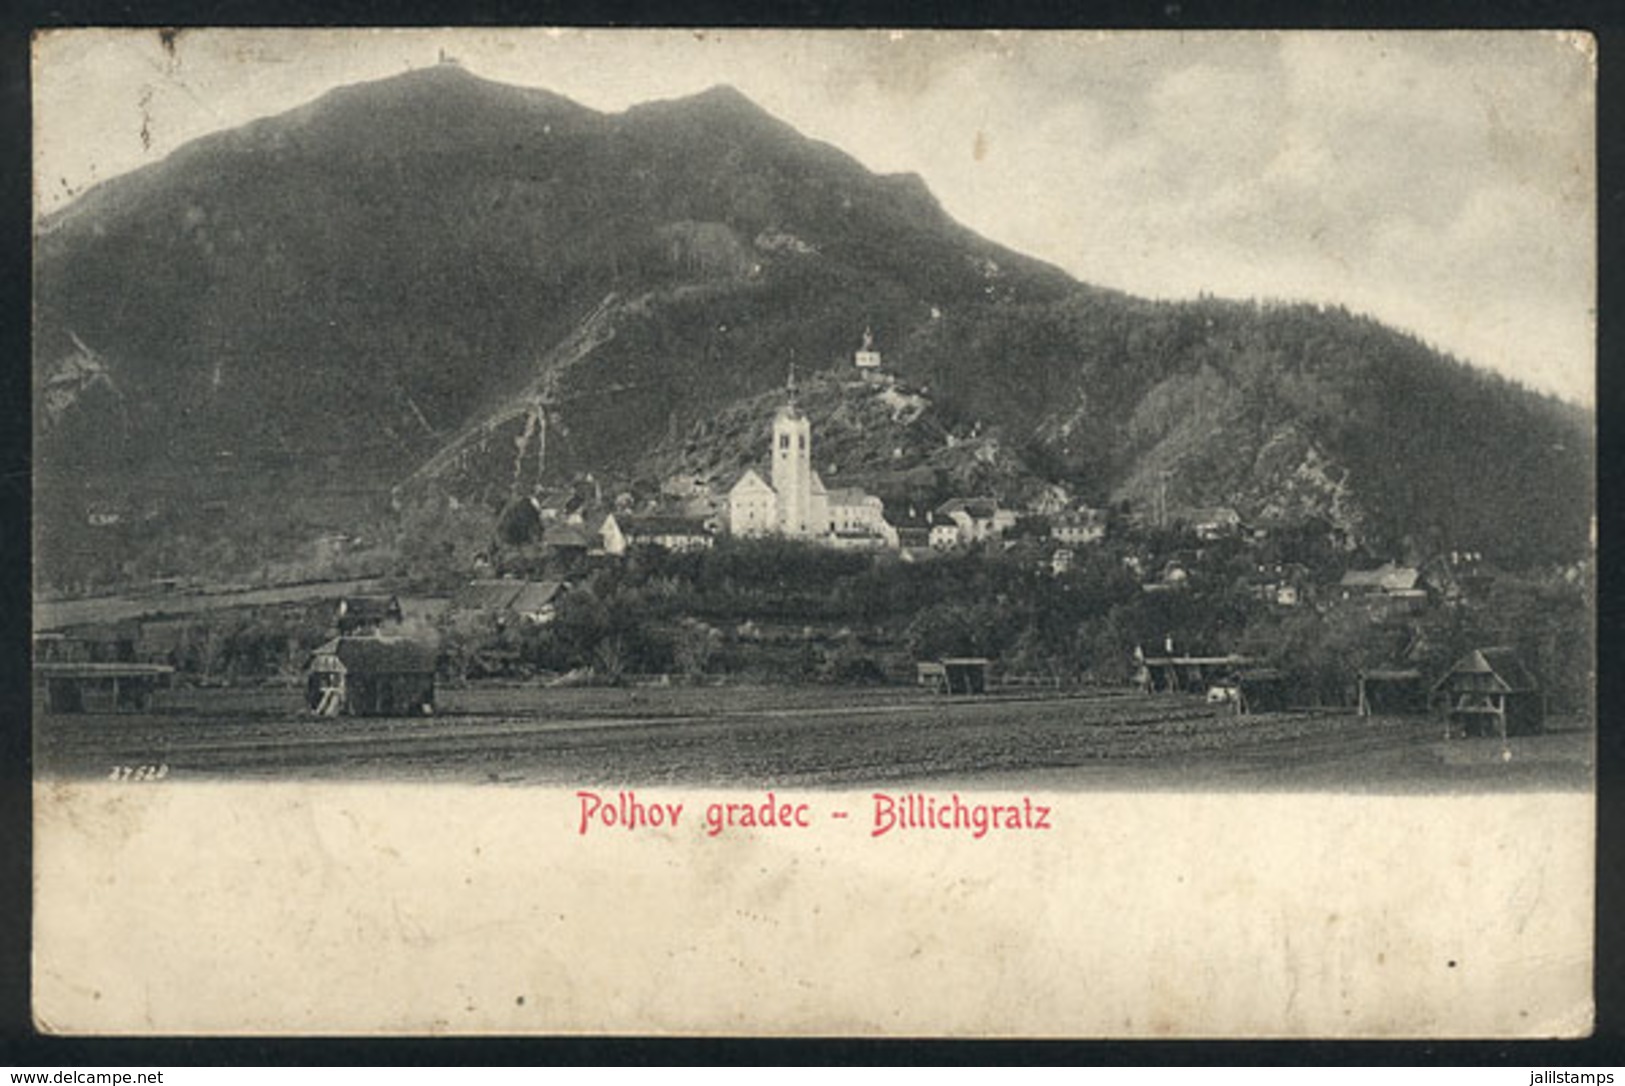 868 SLOVENIA: POLHOV GRADEC: Billichgratz Castle, Circa 1911, Nice View - Slowenien